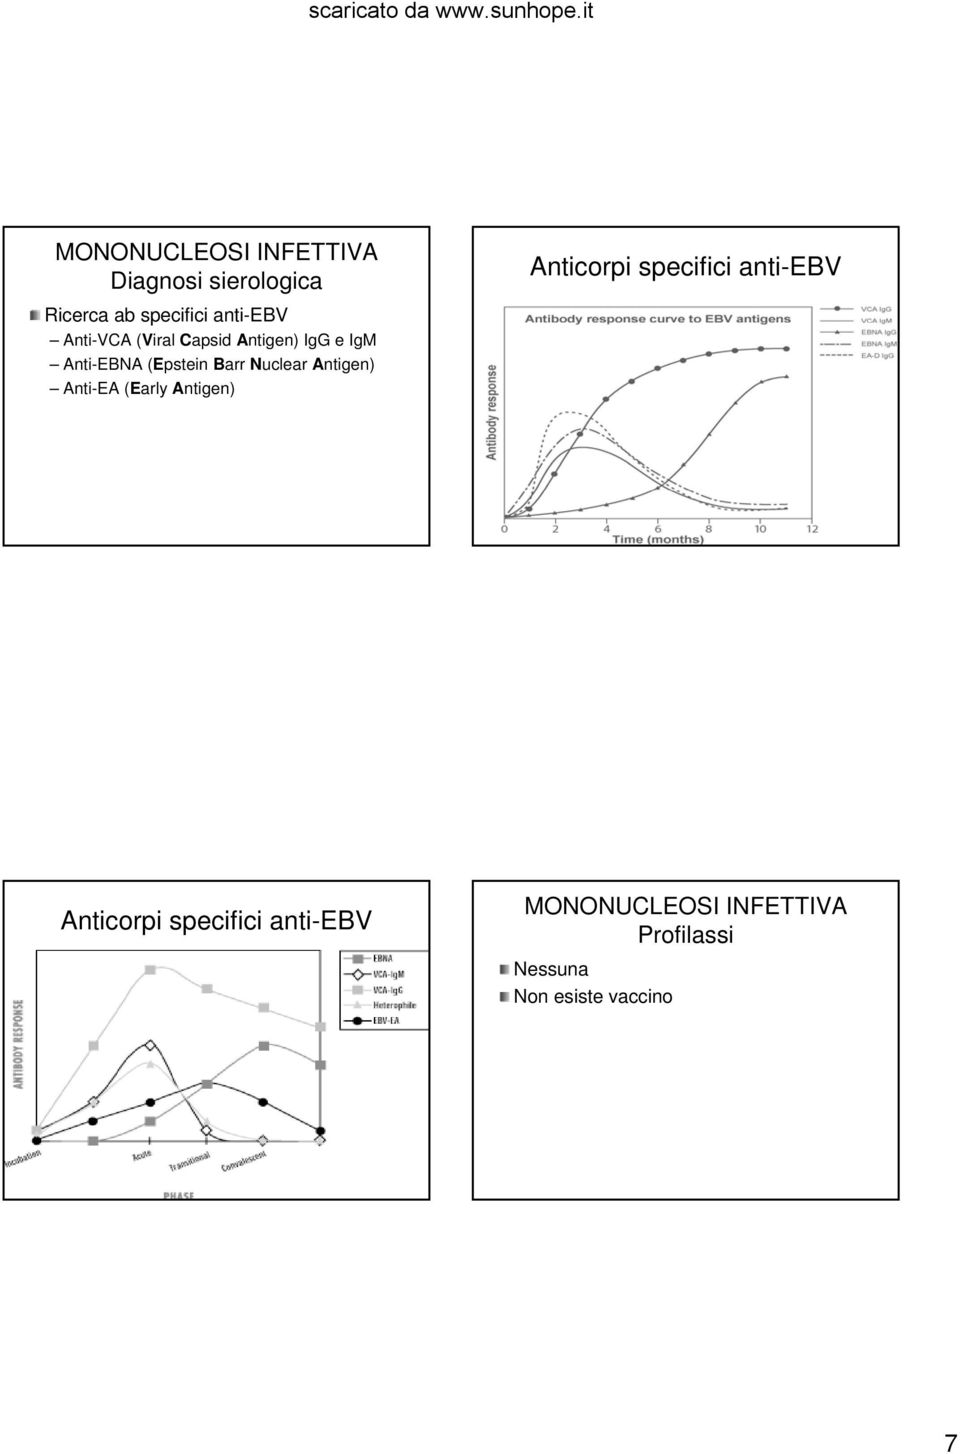 Antigen) Anti-EA(Early Antigen) Anticorpi specifici